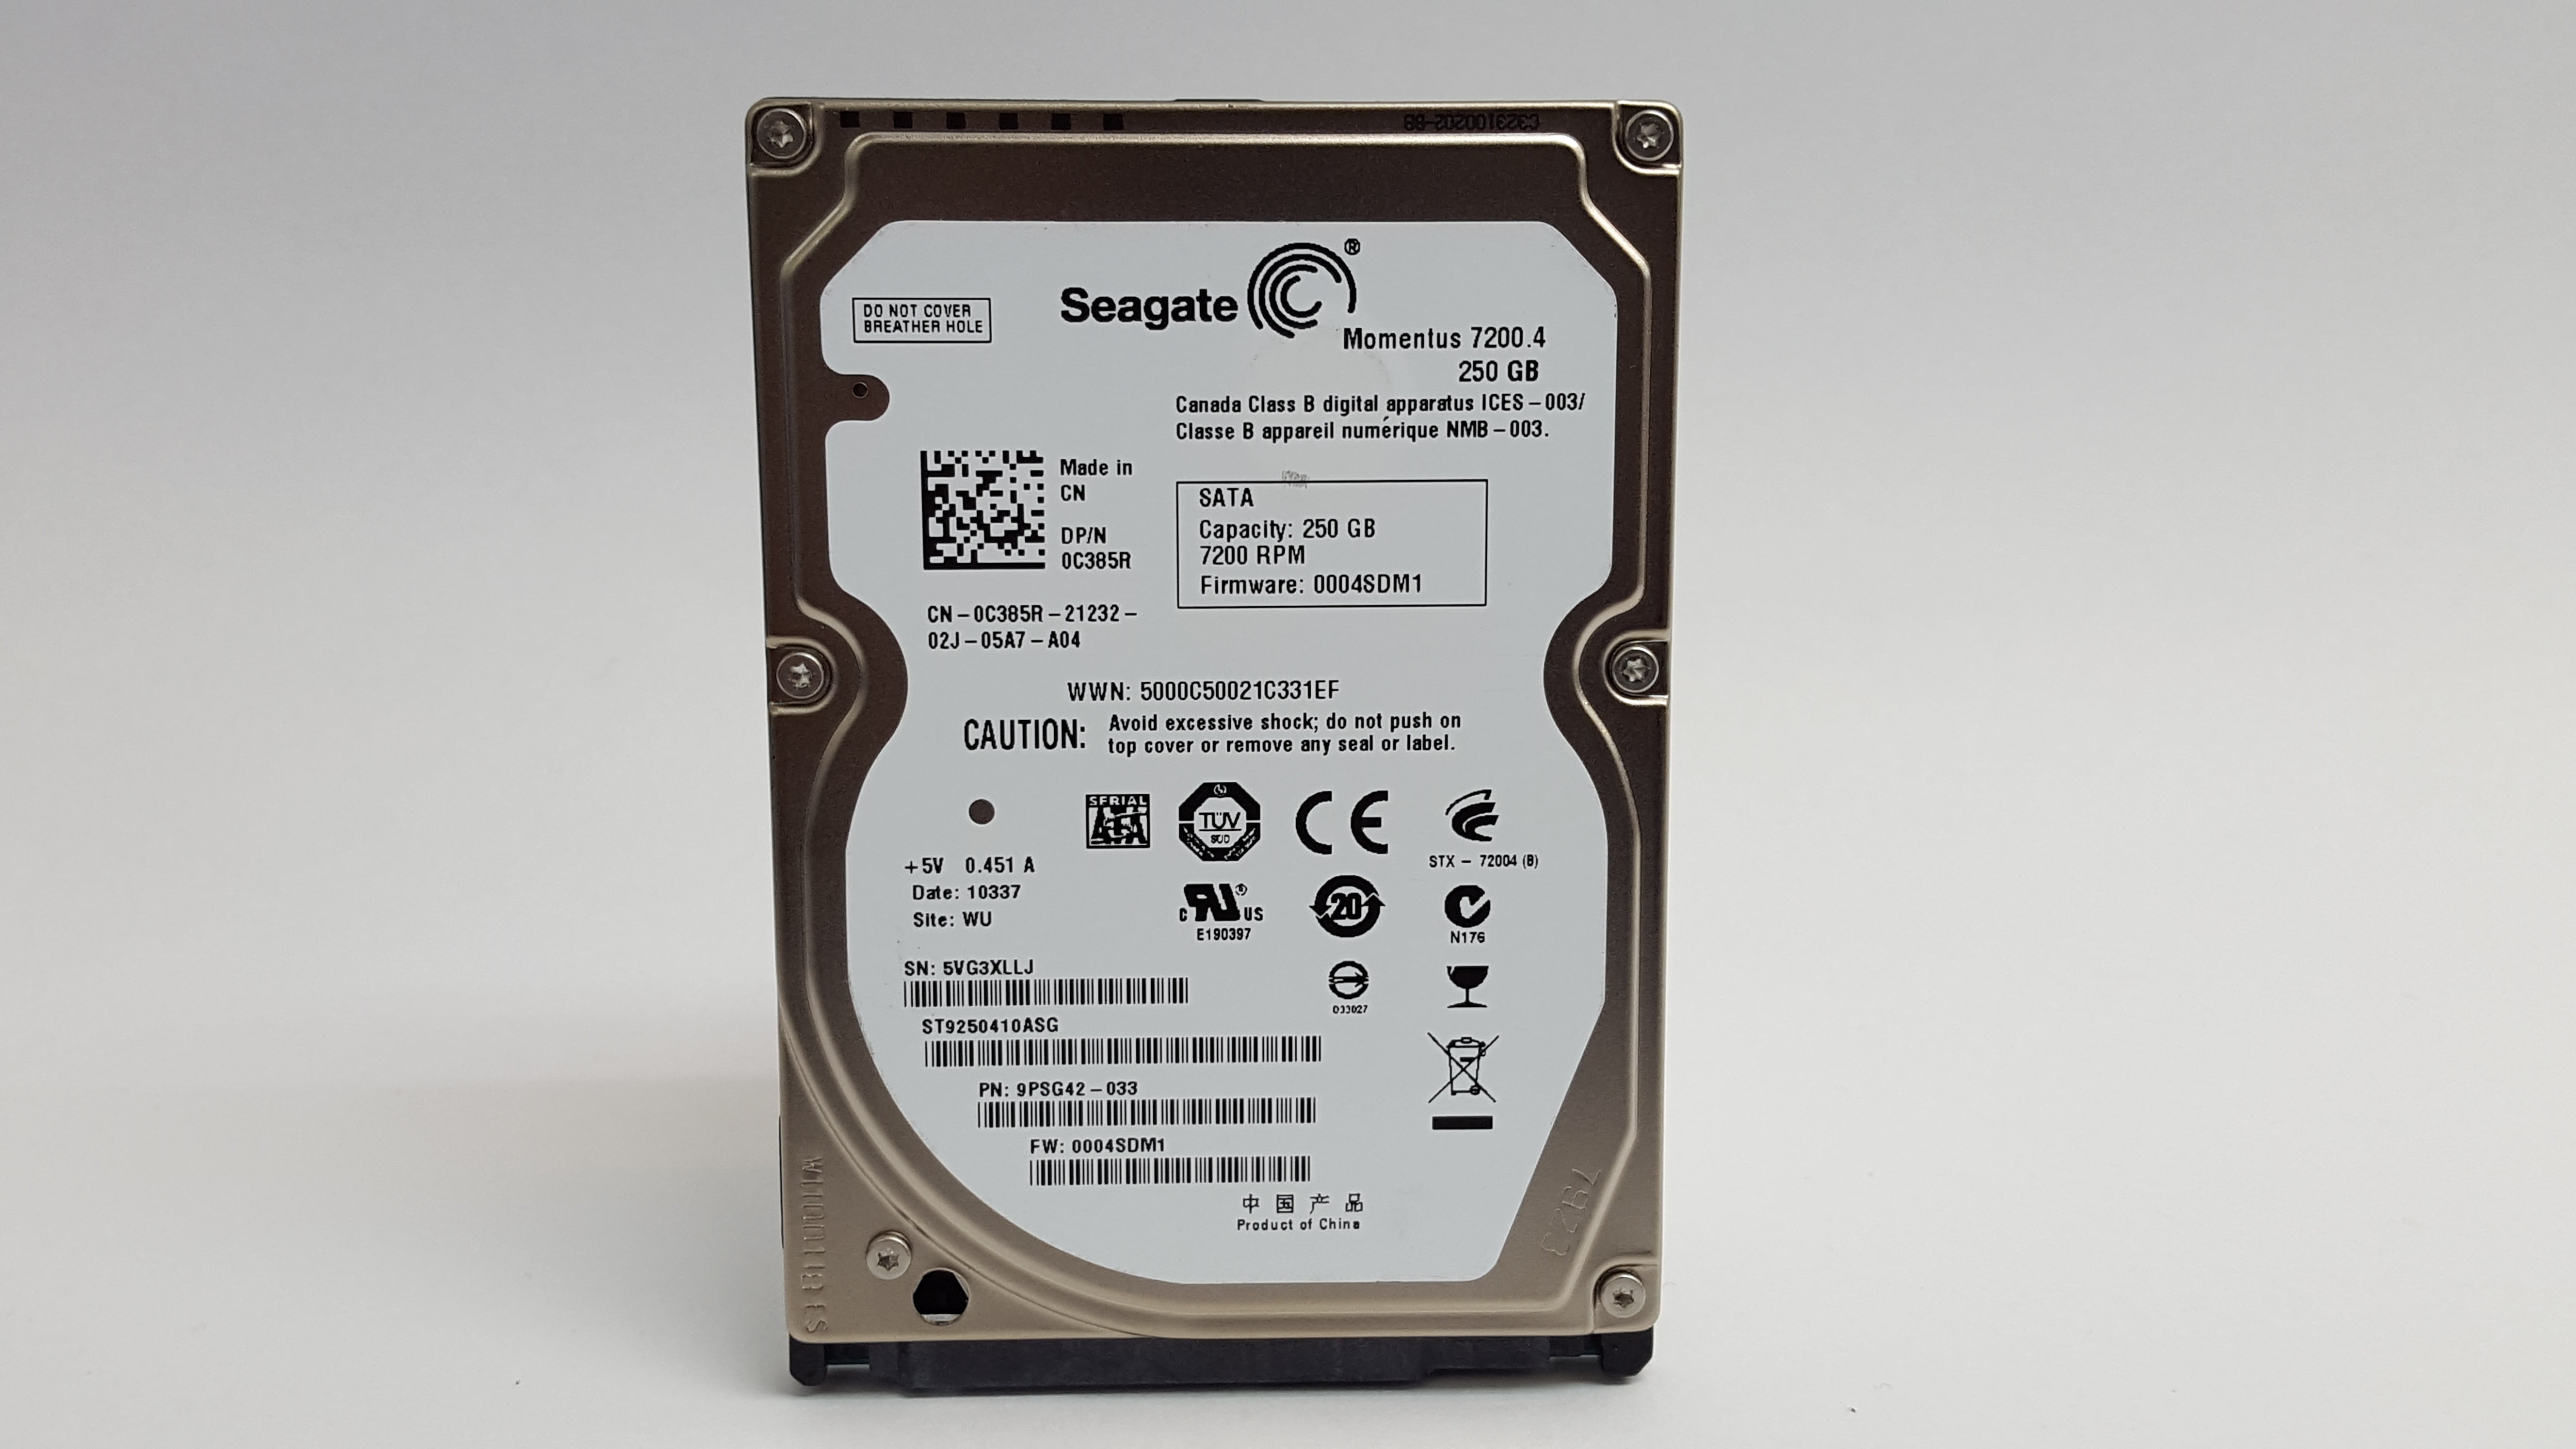 Refurbished Seagate Momentus 7200.4 ST9250410ASG 250GB 2.5" SATA II Laptop Hard Drive